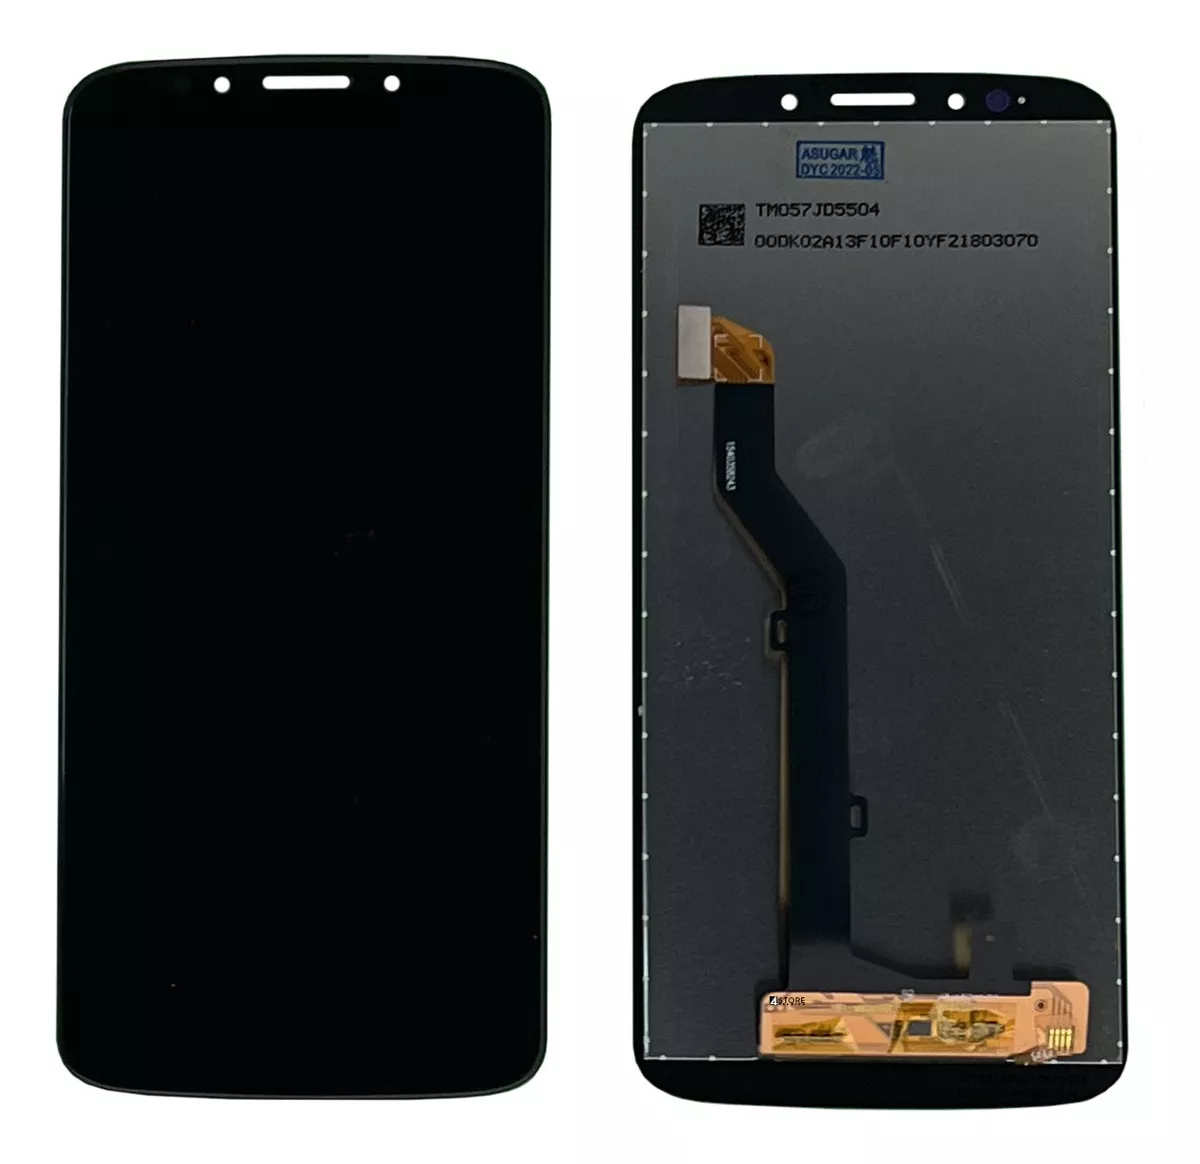  Tela Frontal Display Compativel Moto G6 Play Incell + Pel